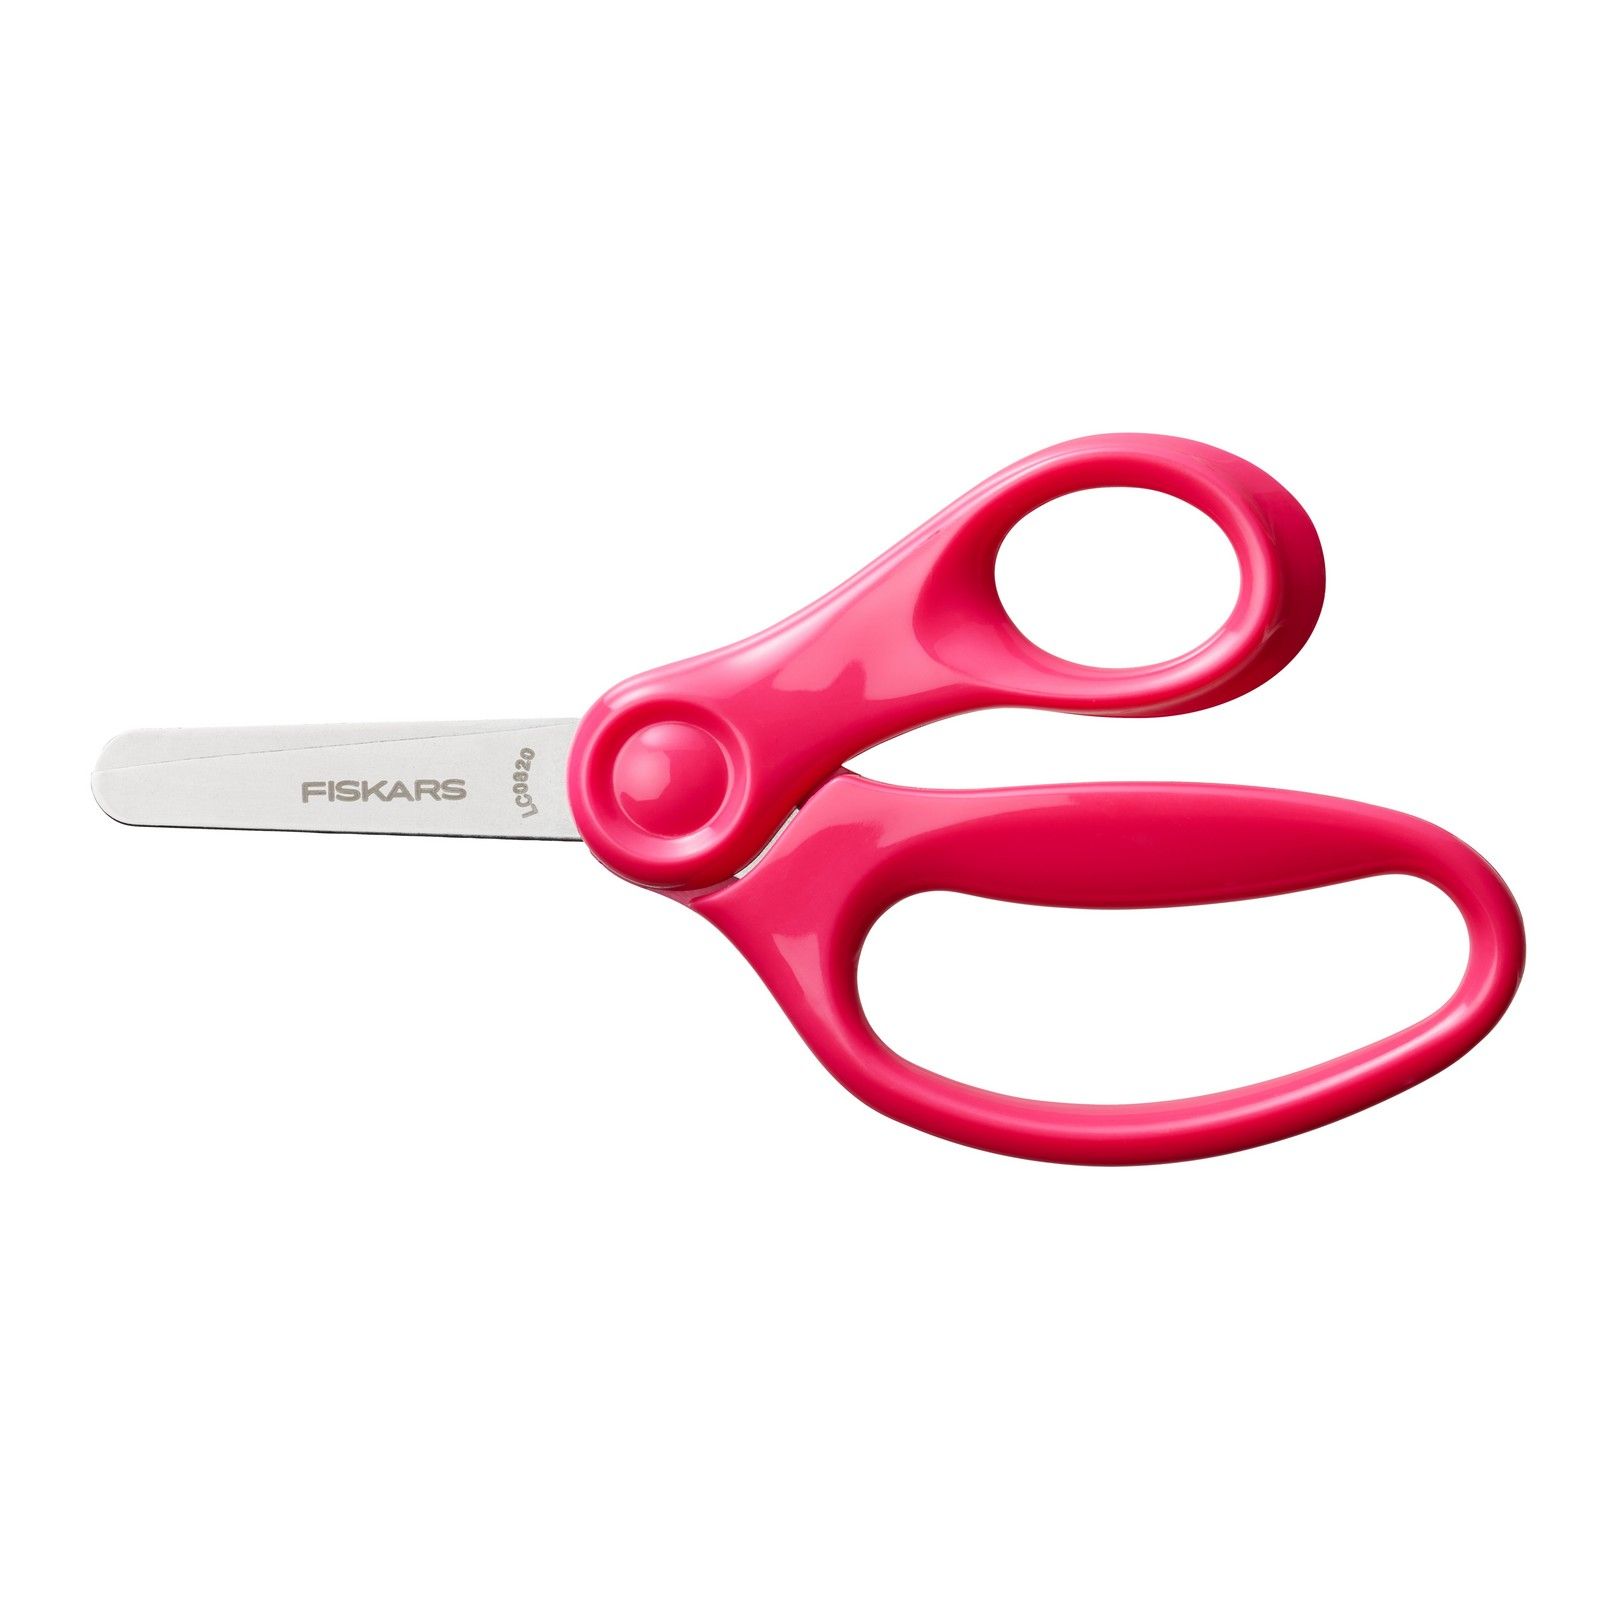 Fiskars • Blunt-tip Kids Scissors Pink for +6 years old